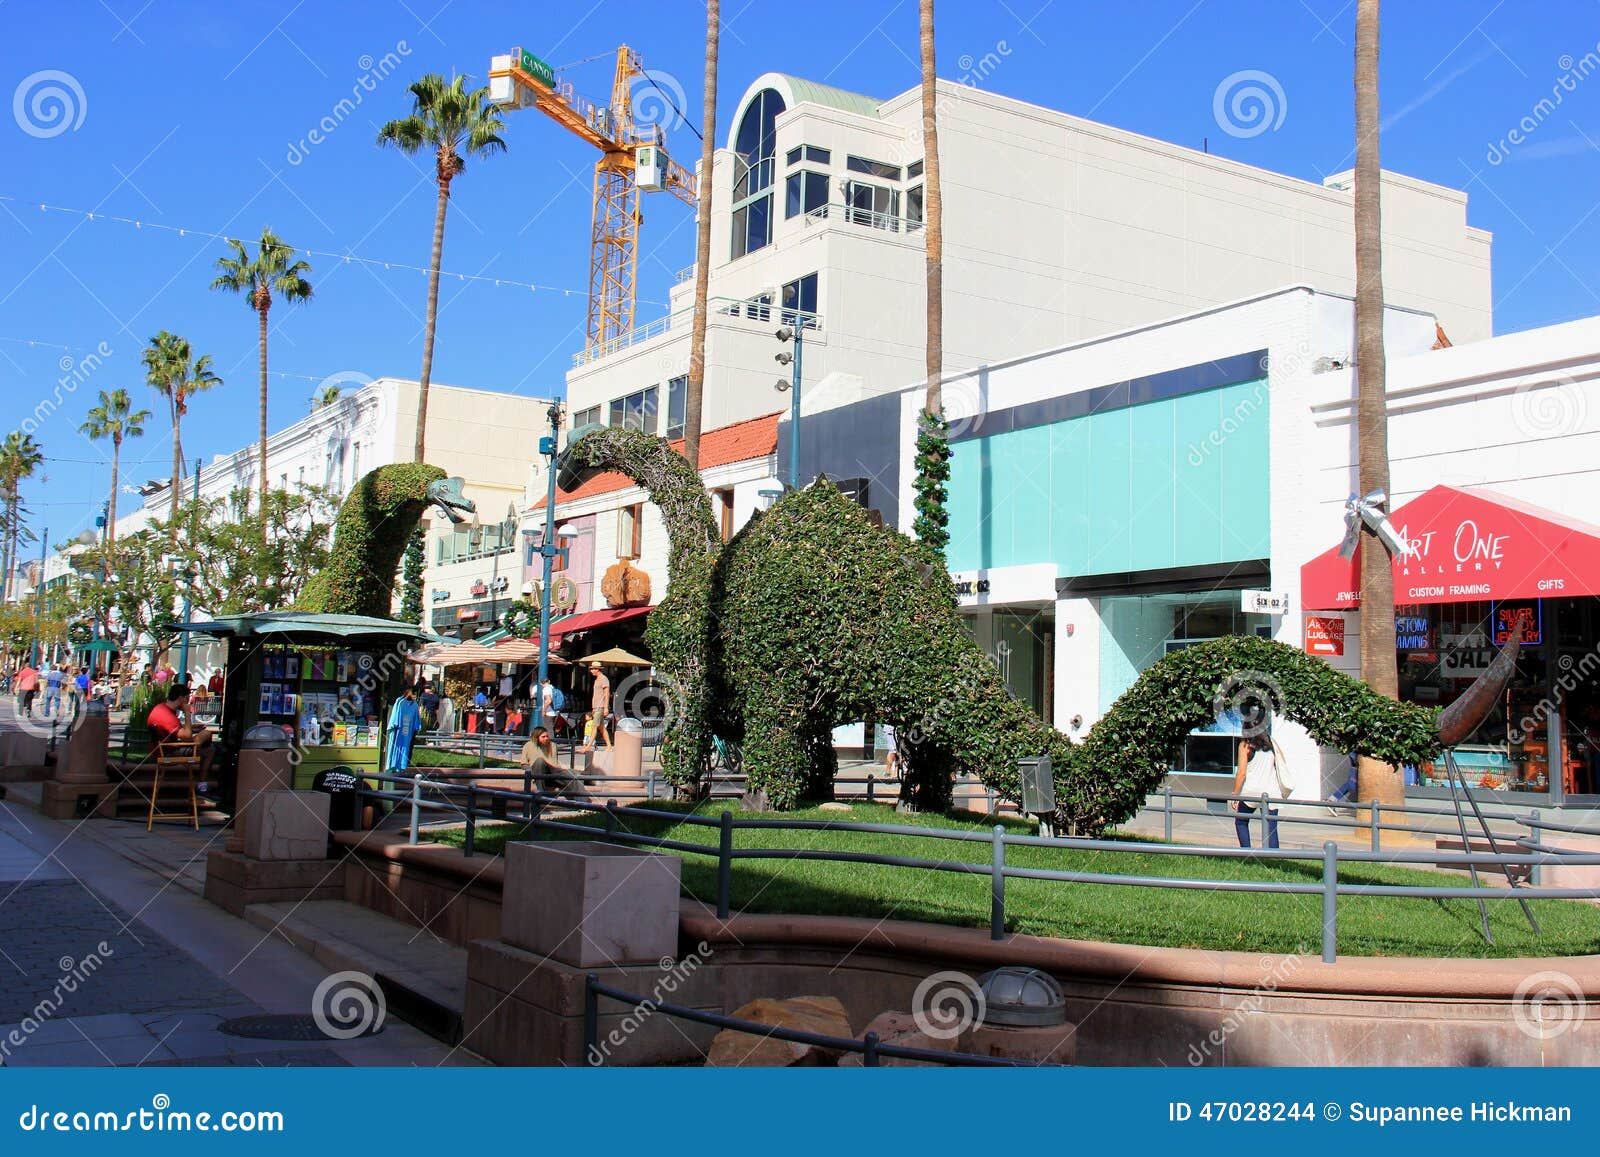 The Third Street Promenade of Santa Monica Editorial Stock Image ...